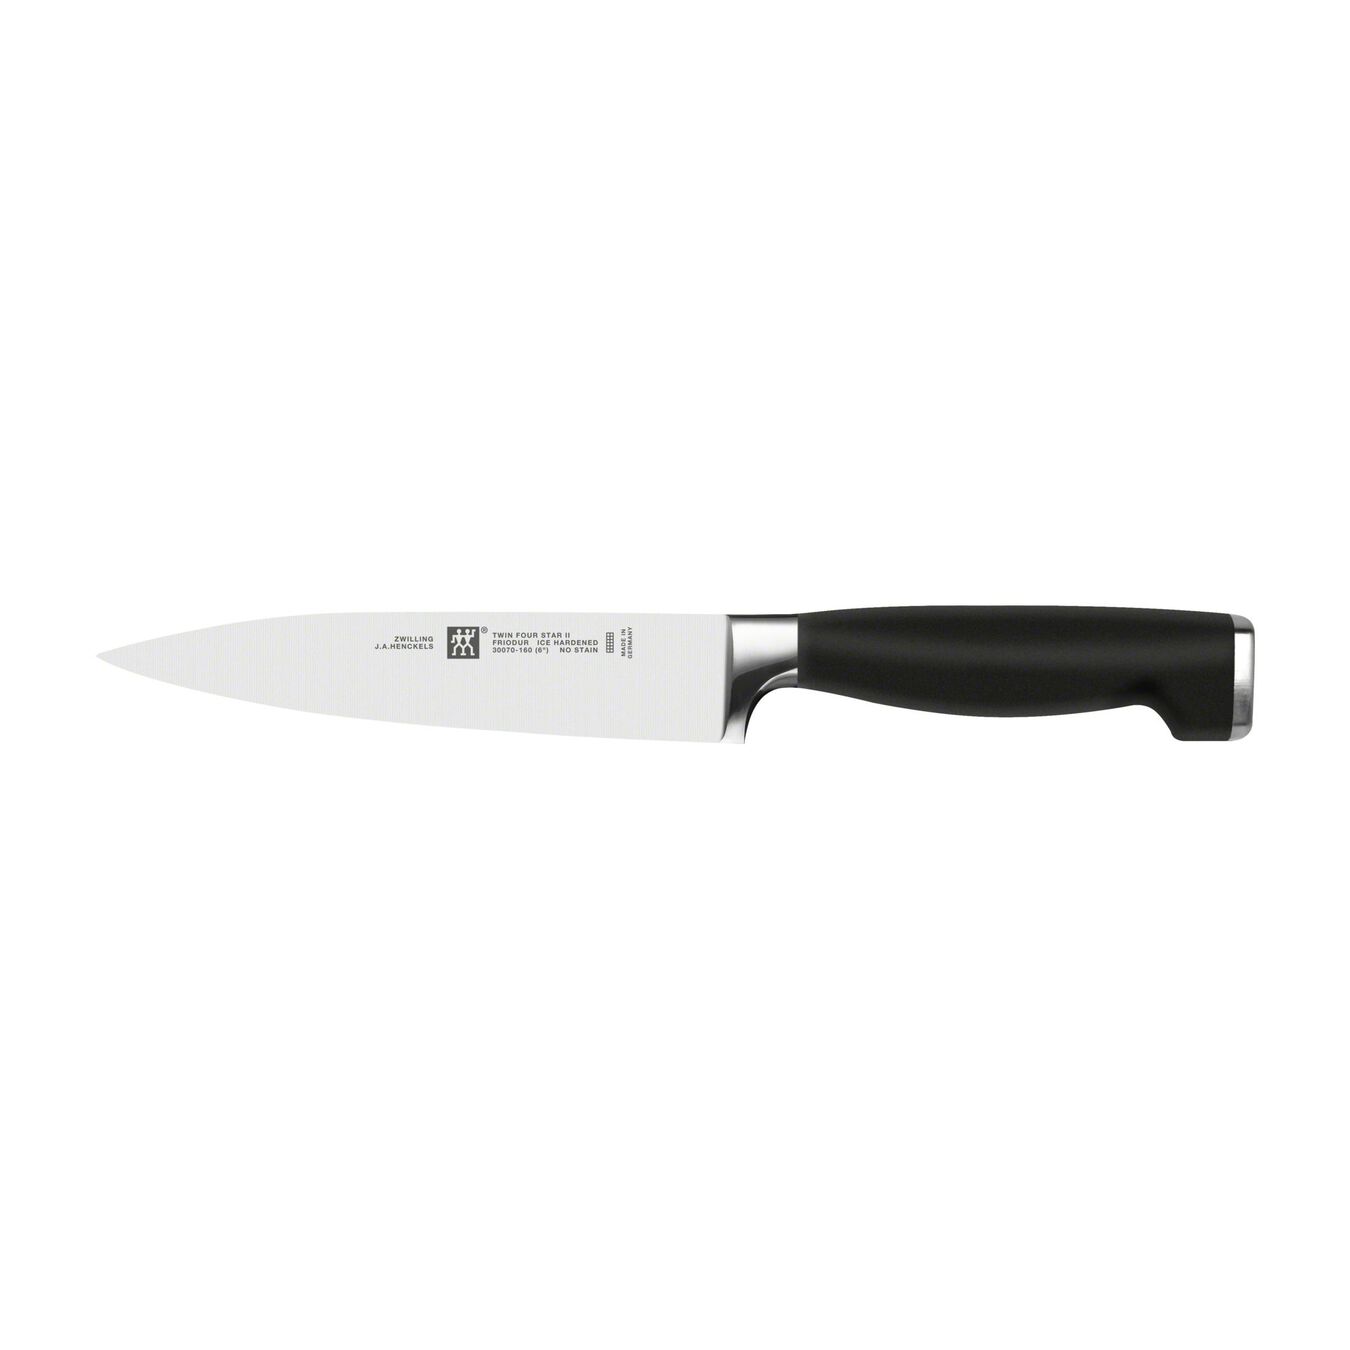 6-inch, Utility Knife,,large 2